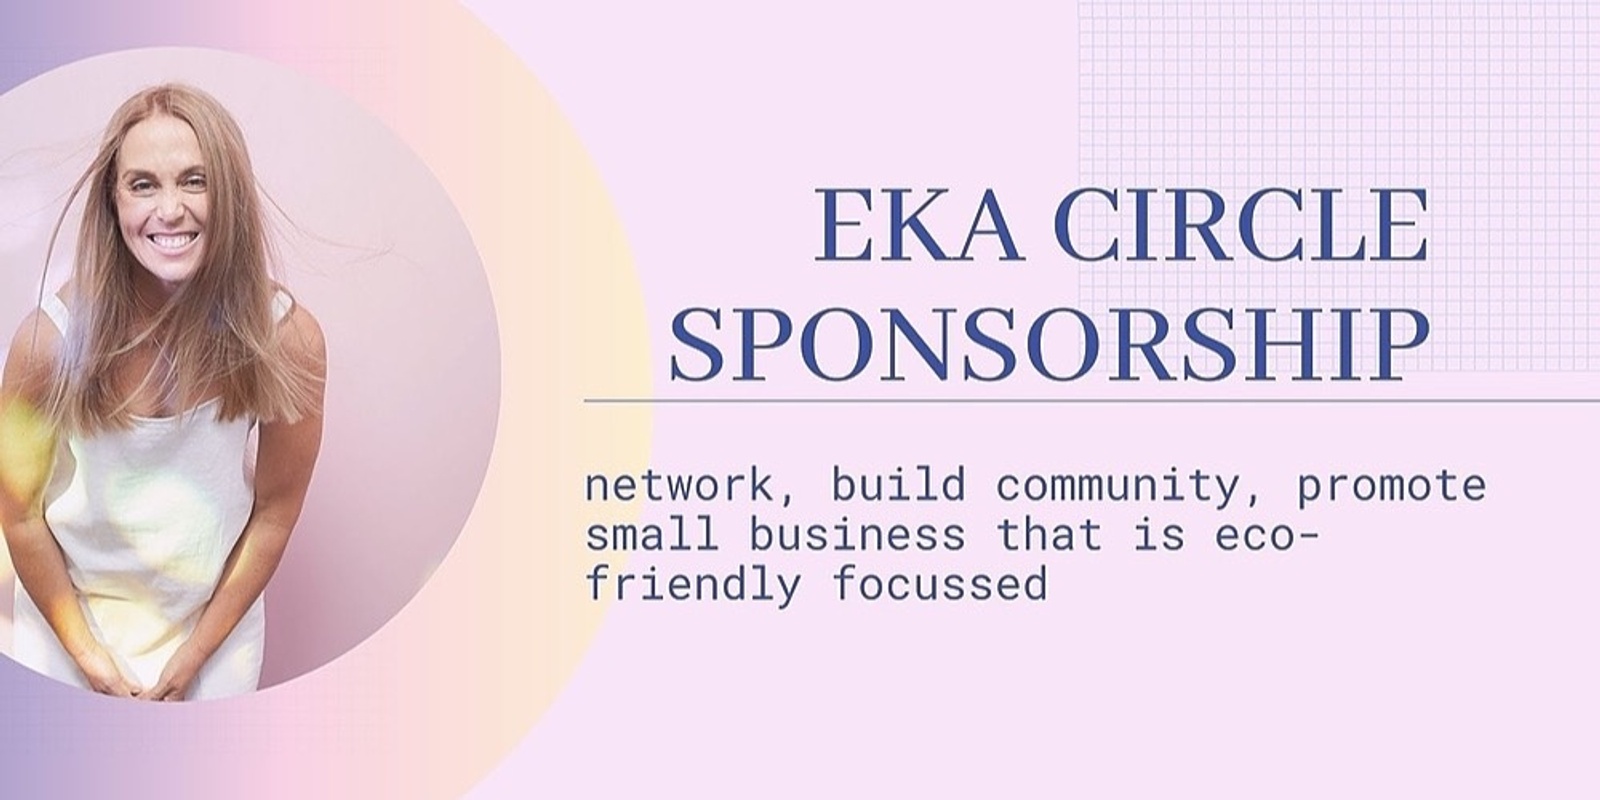 Banner image for eKa CIRCLE community sponsorship